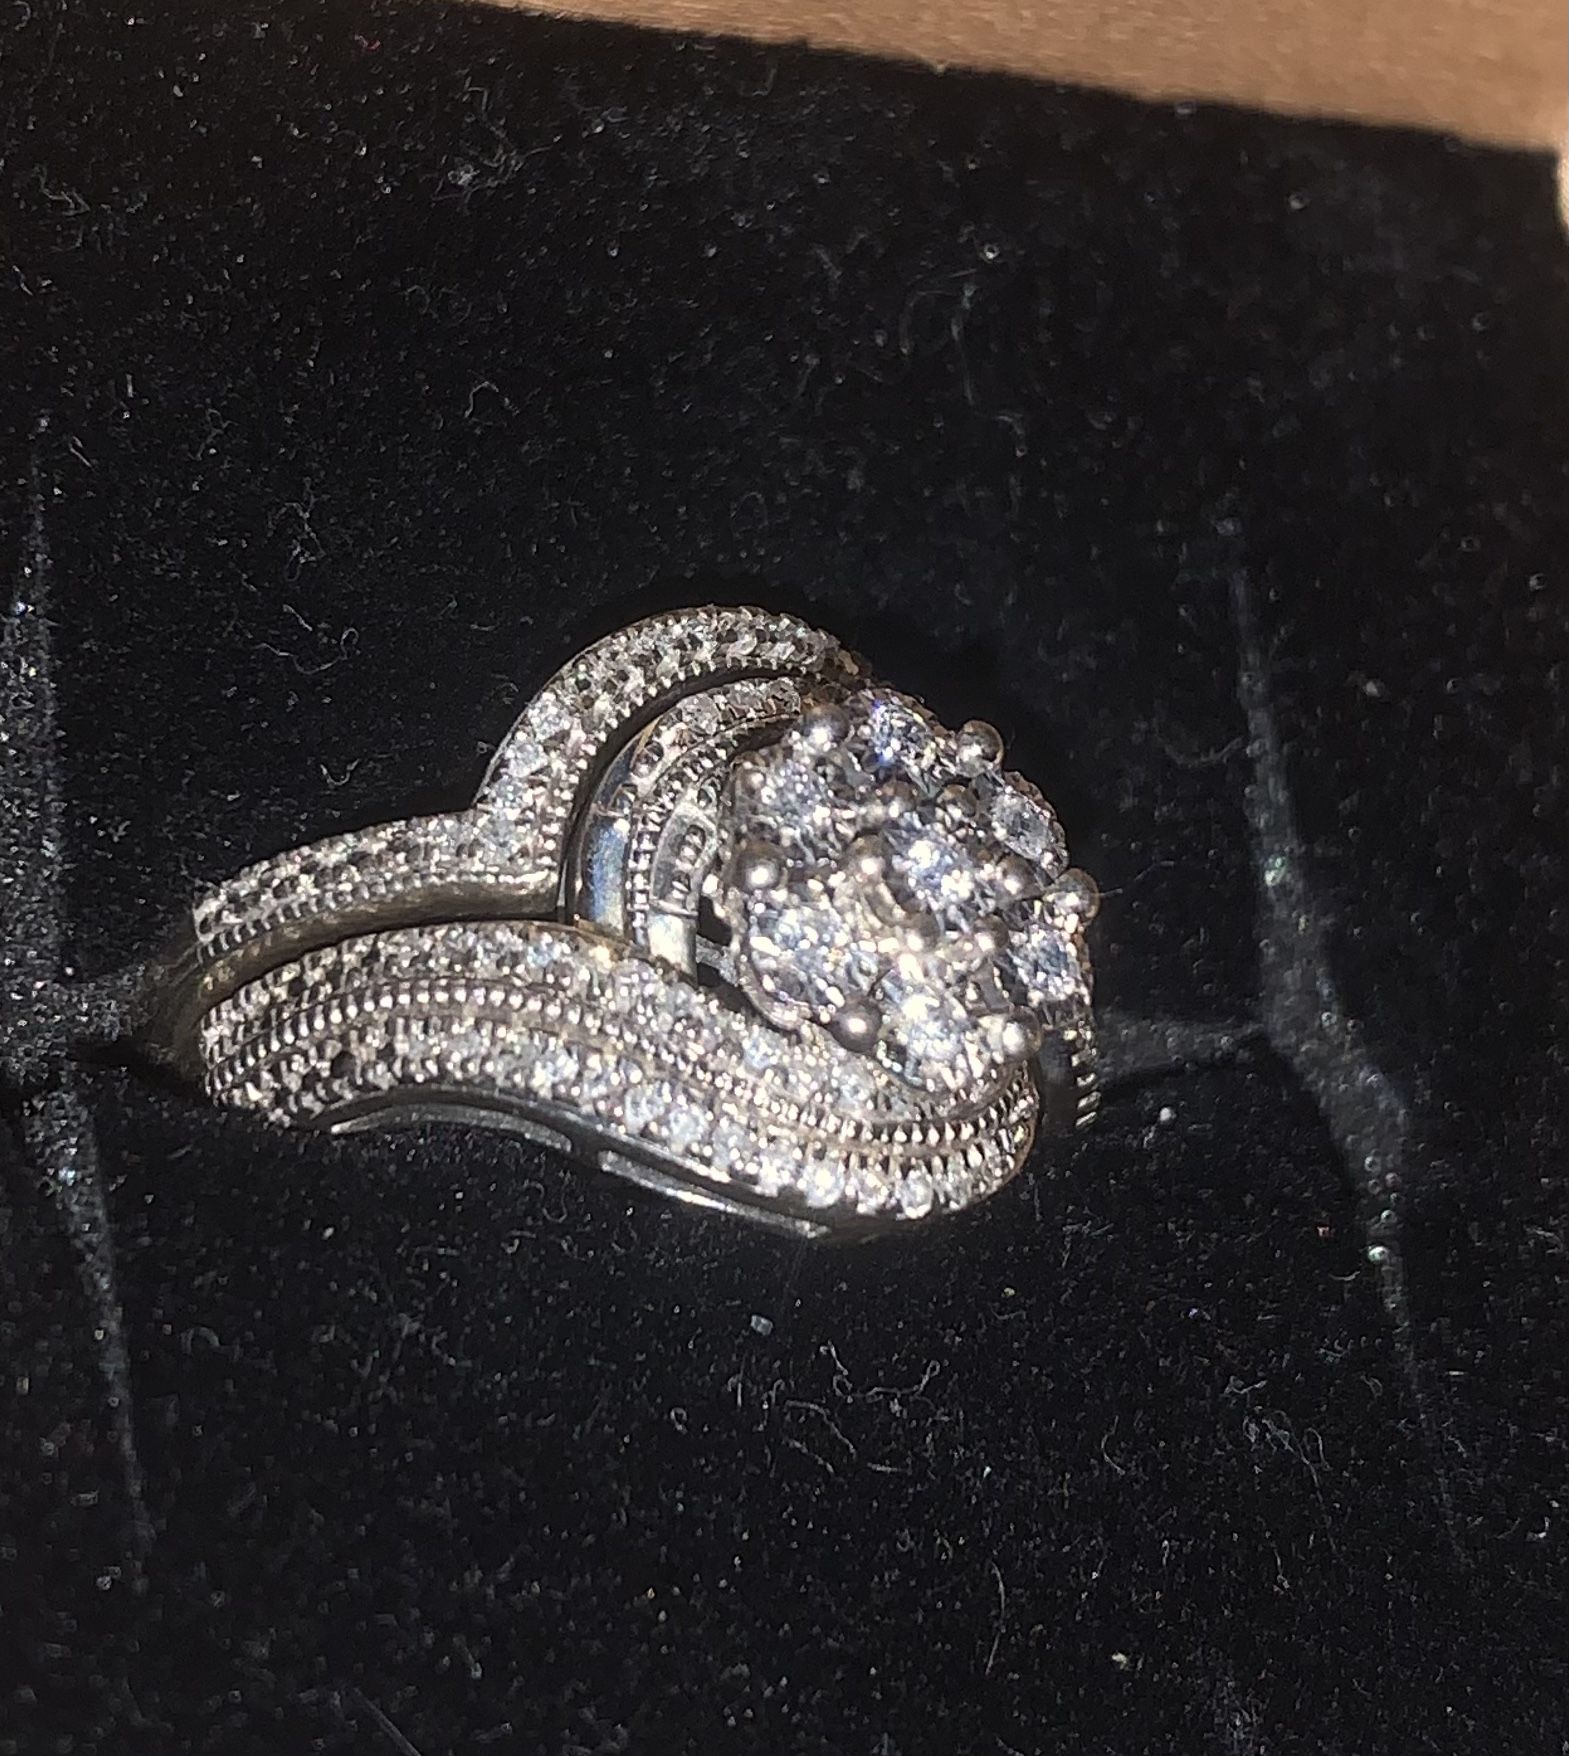 Beautiful Sz 7 Cluster Diamond Engagement Ring 